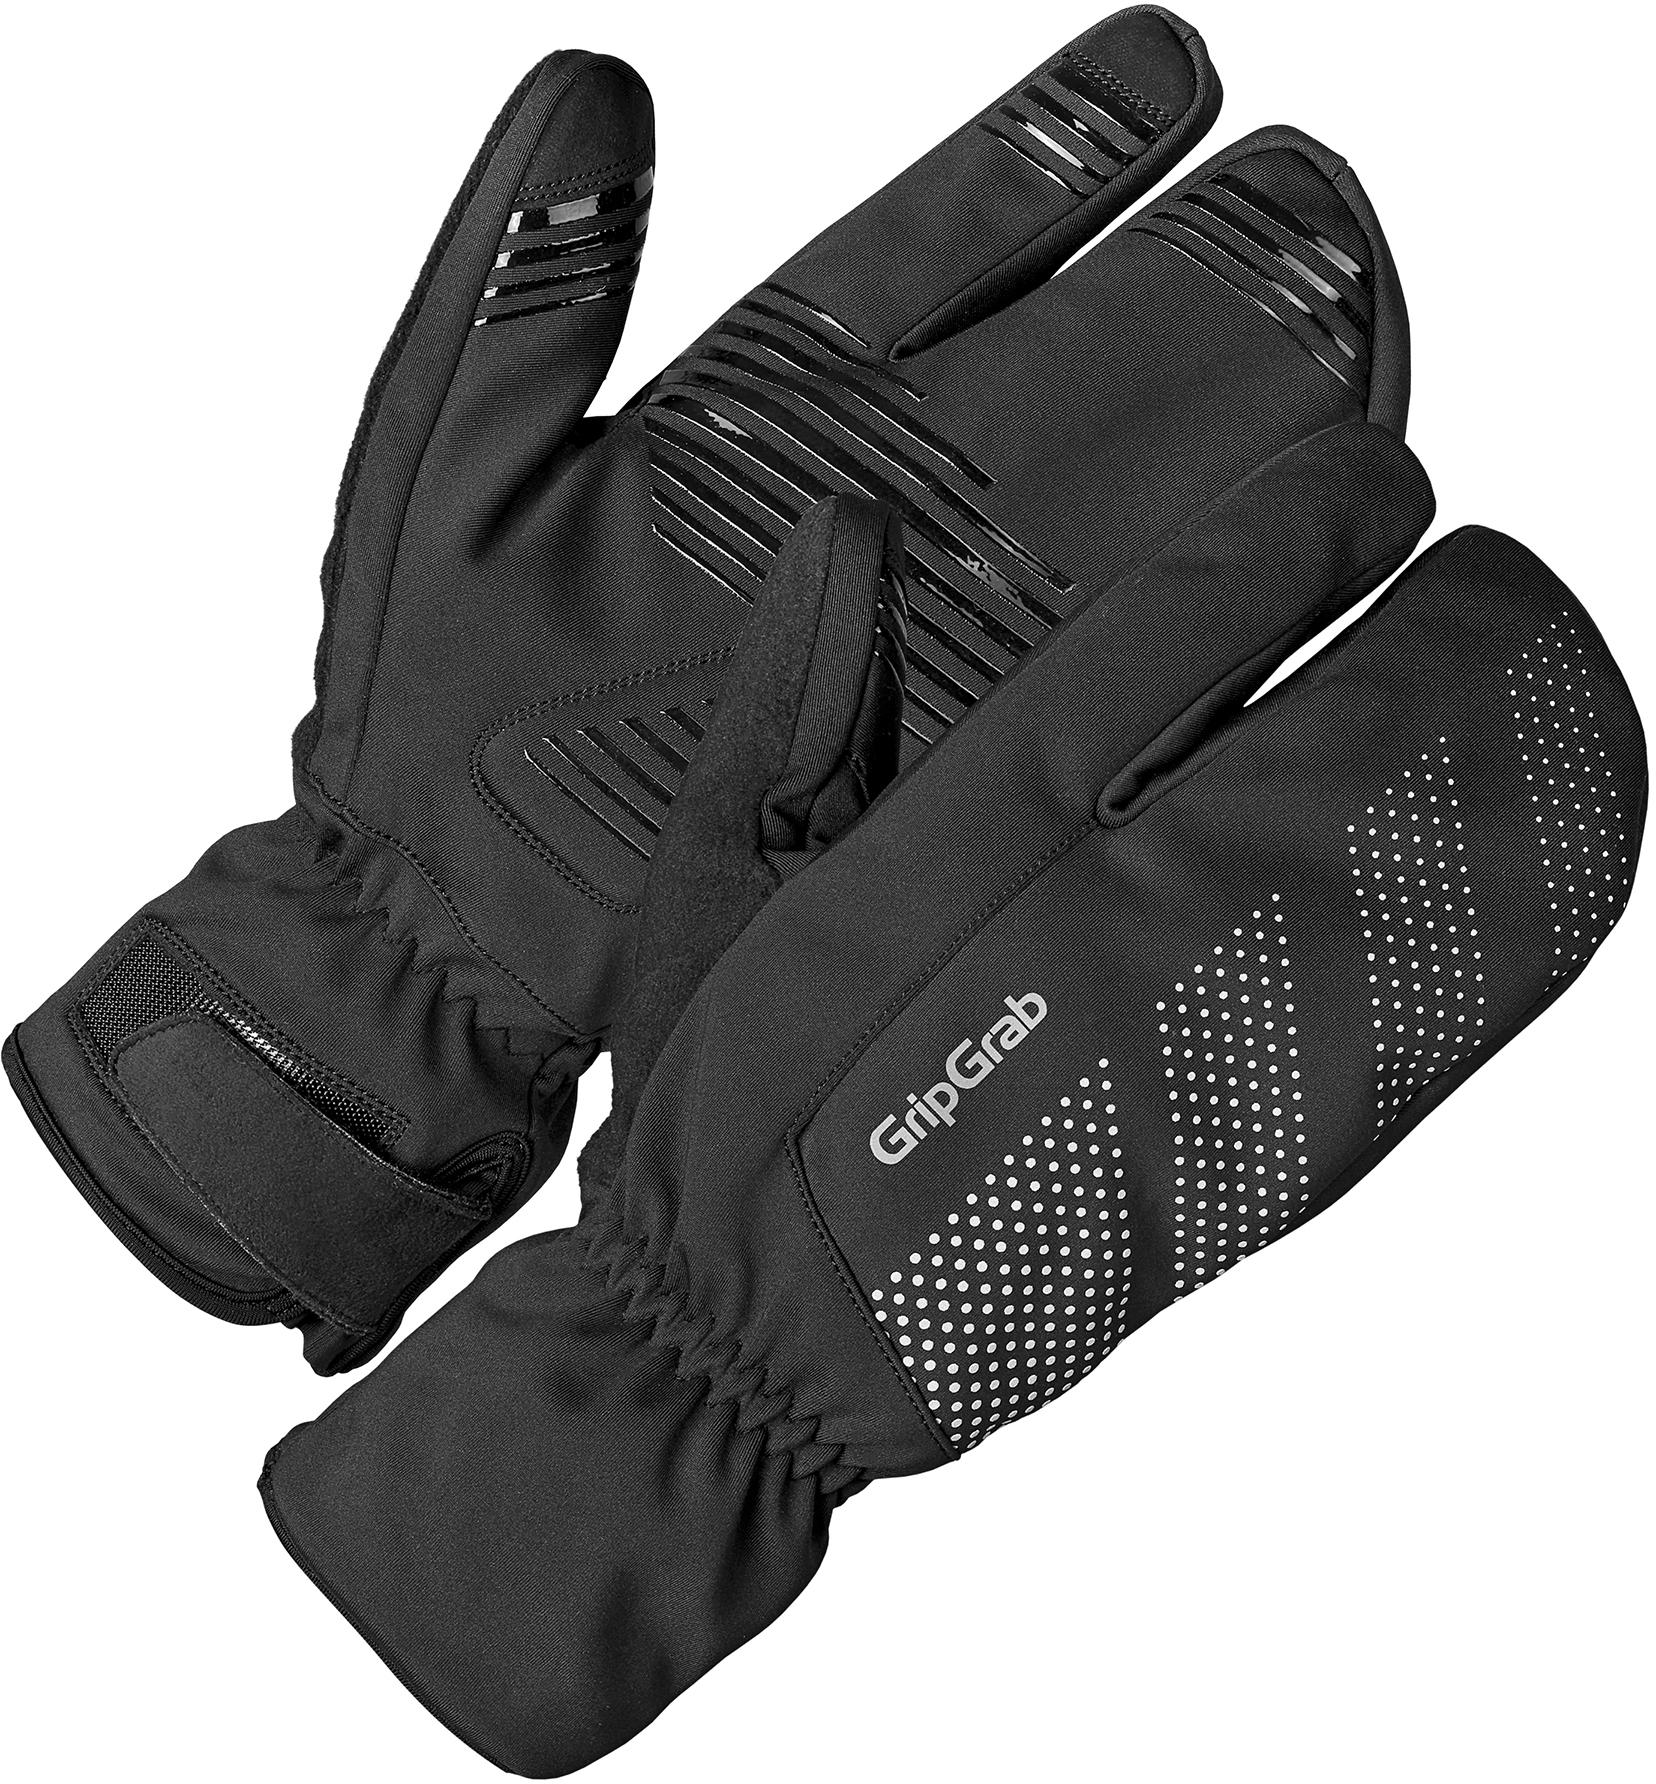 Gripgrab Ride Windproof Deep Winter Lobster Gloves - Black